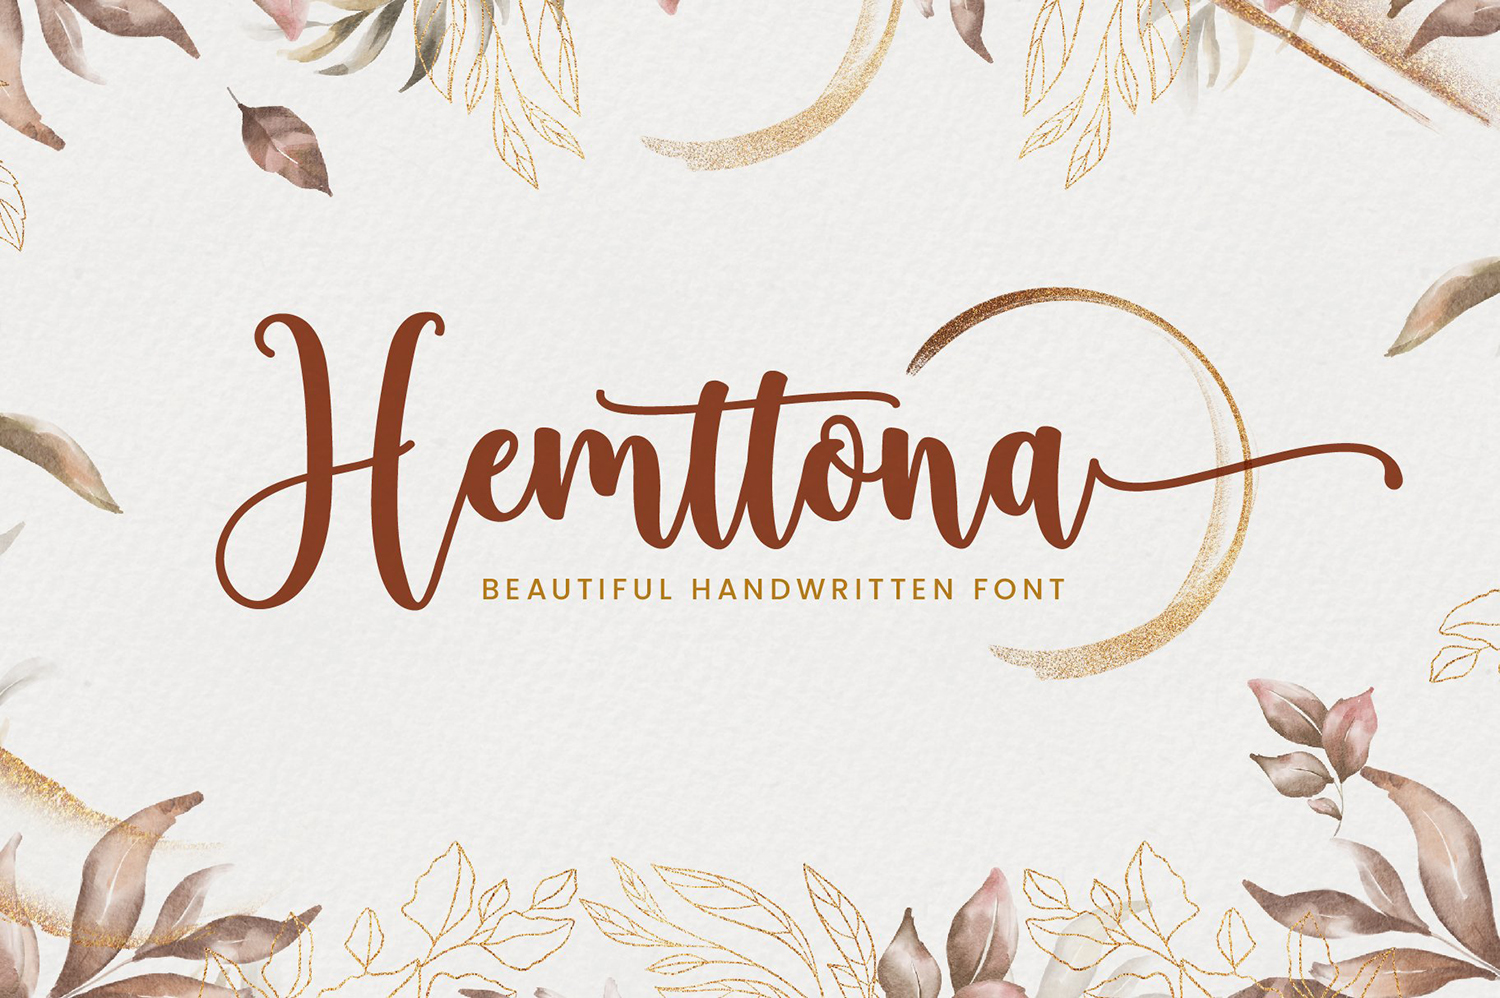 Hemttona Free Font